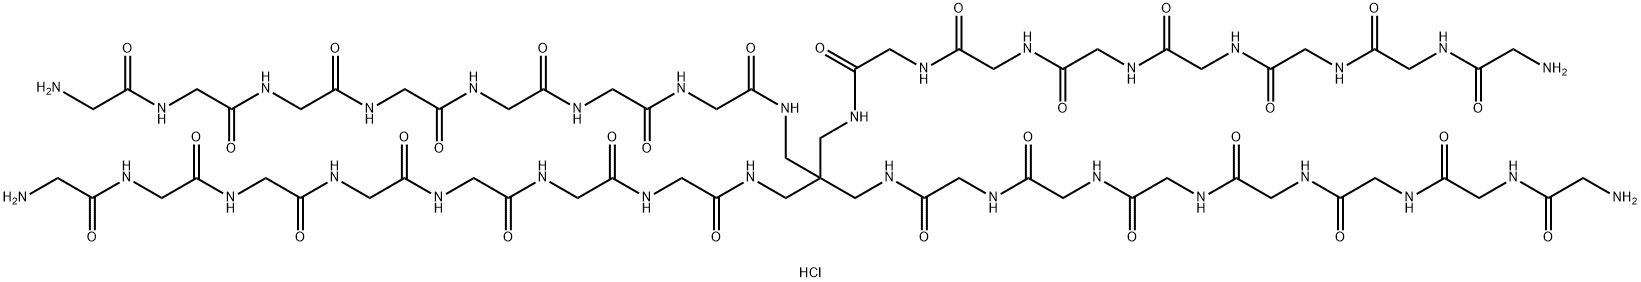 Glycylglycylglycylglycylglycylglycylglycine tetraamide with 2,2-bis(aminomethyl)-1,3-propanediamine Structure